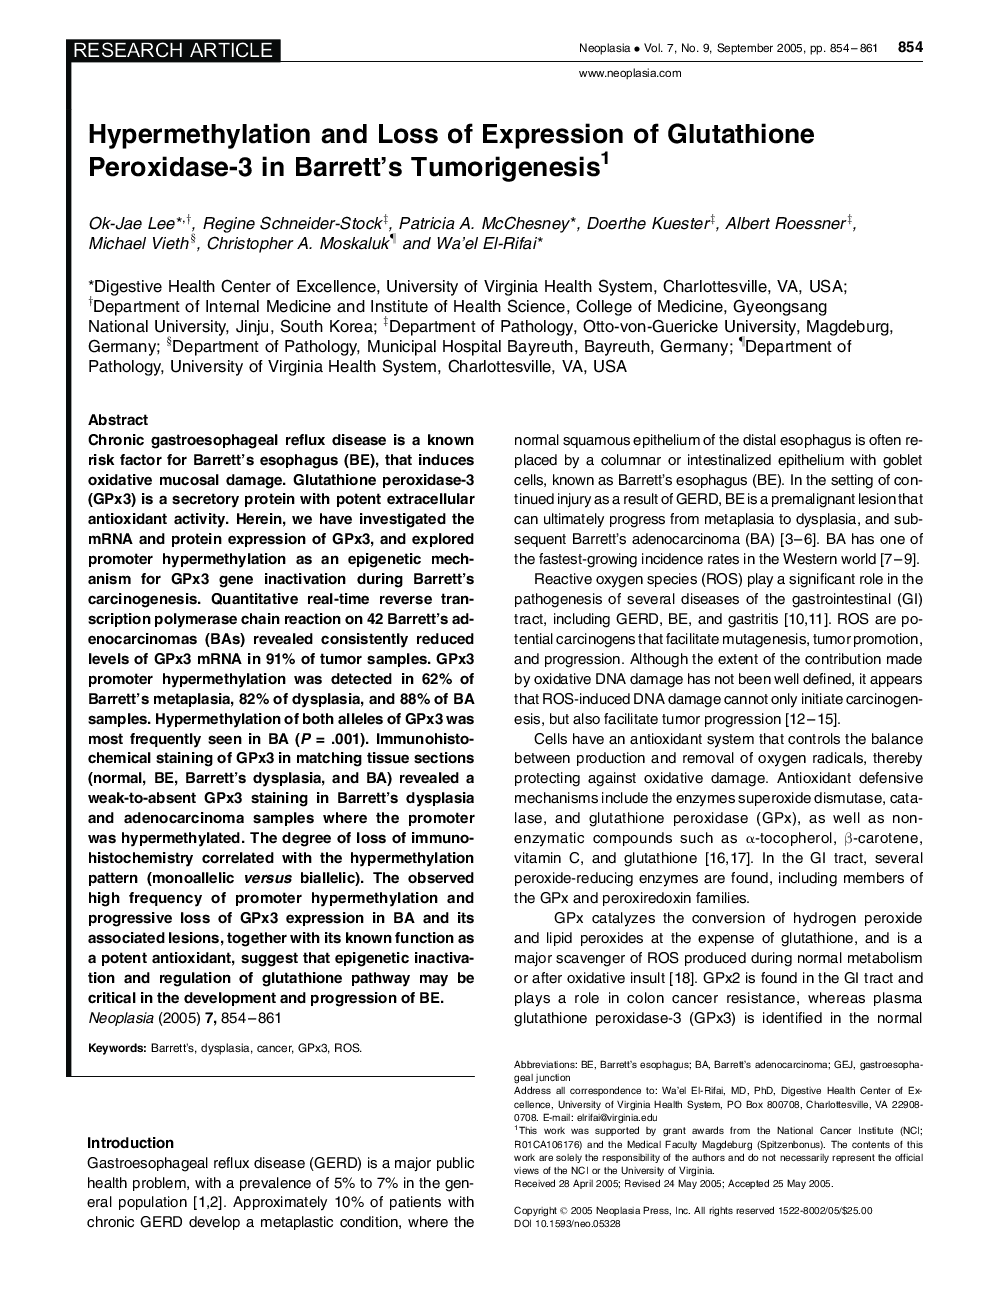 Hypermethylation, Loss of Expression of Glutathione Peroxidase-3 in Barrett's Tumorigenesis